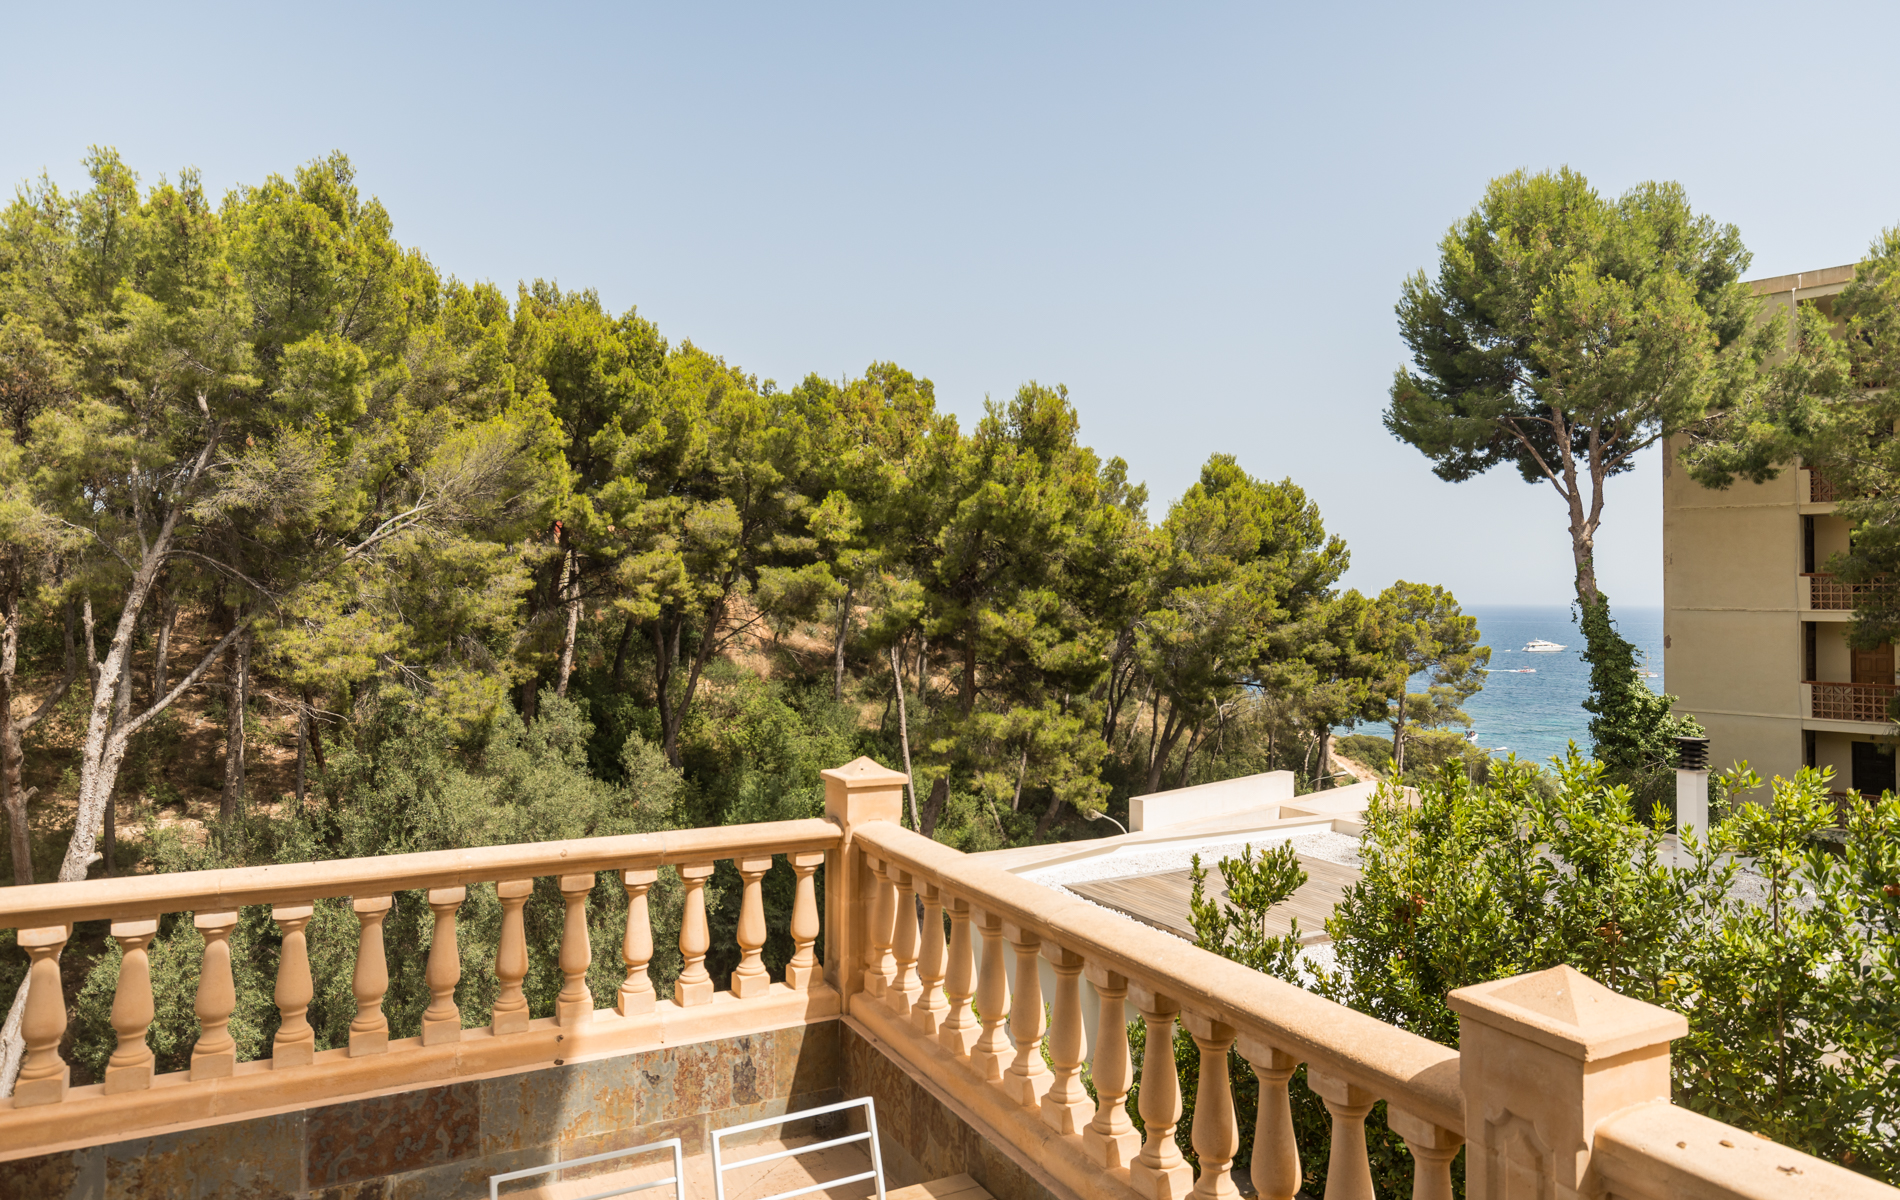 Mediterranean style villa close to the beach & Portals Nous village